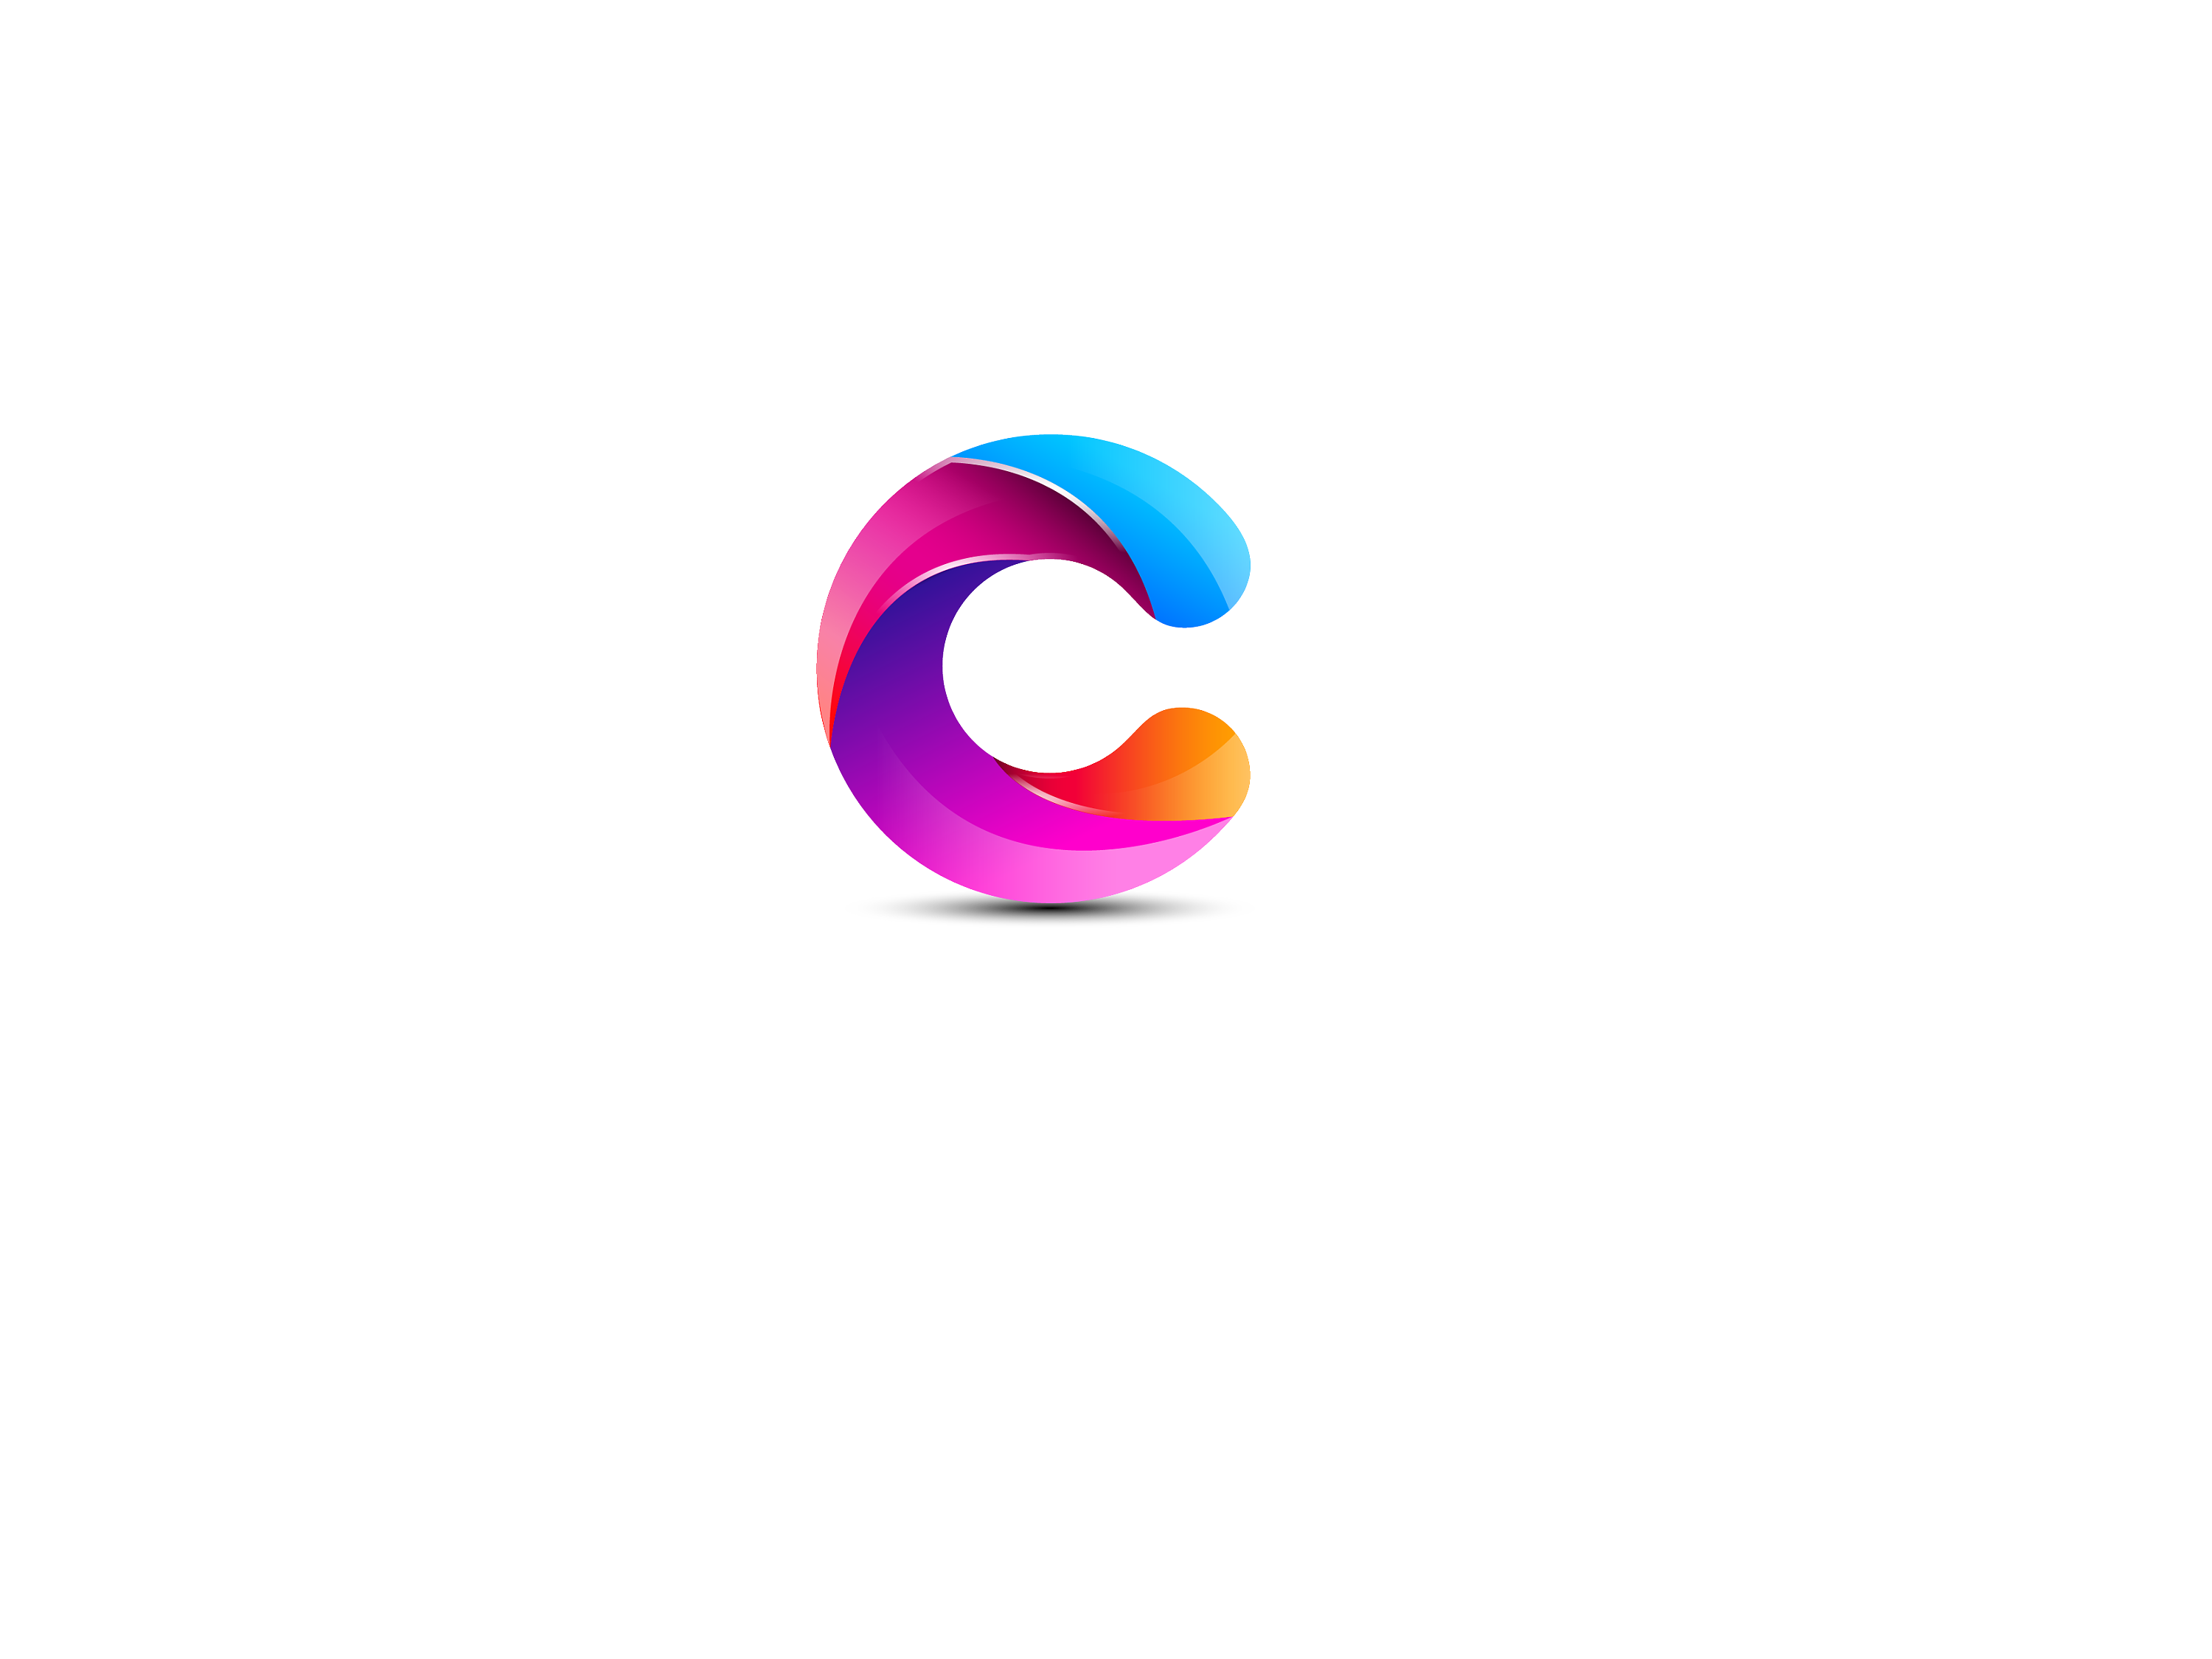 现代渐变logo图标icon设计元素 - 模板 - Canva可画